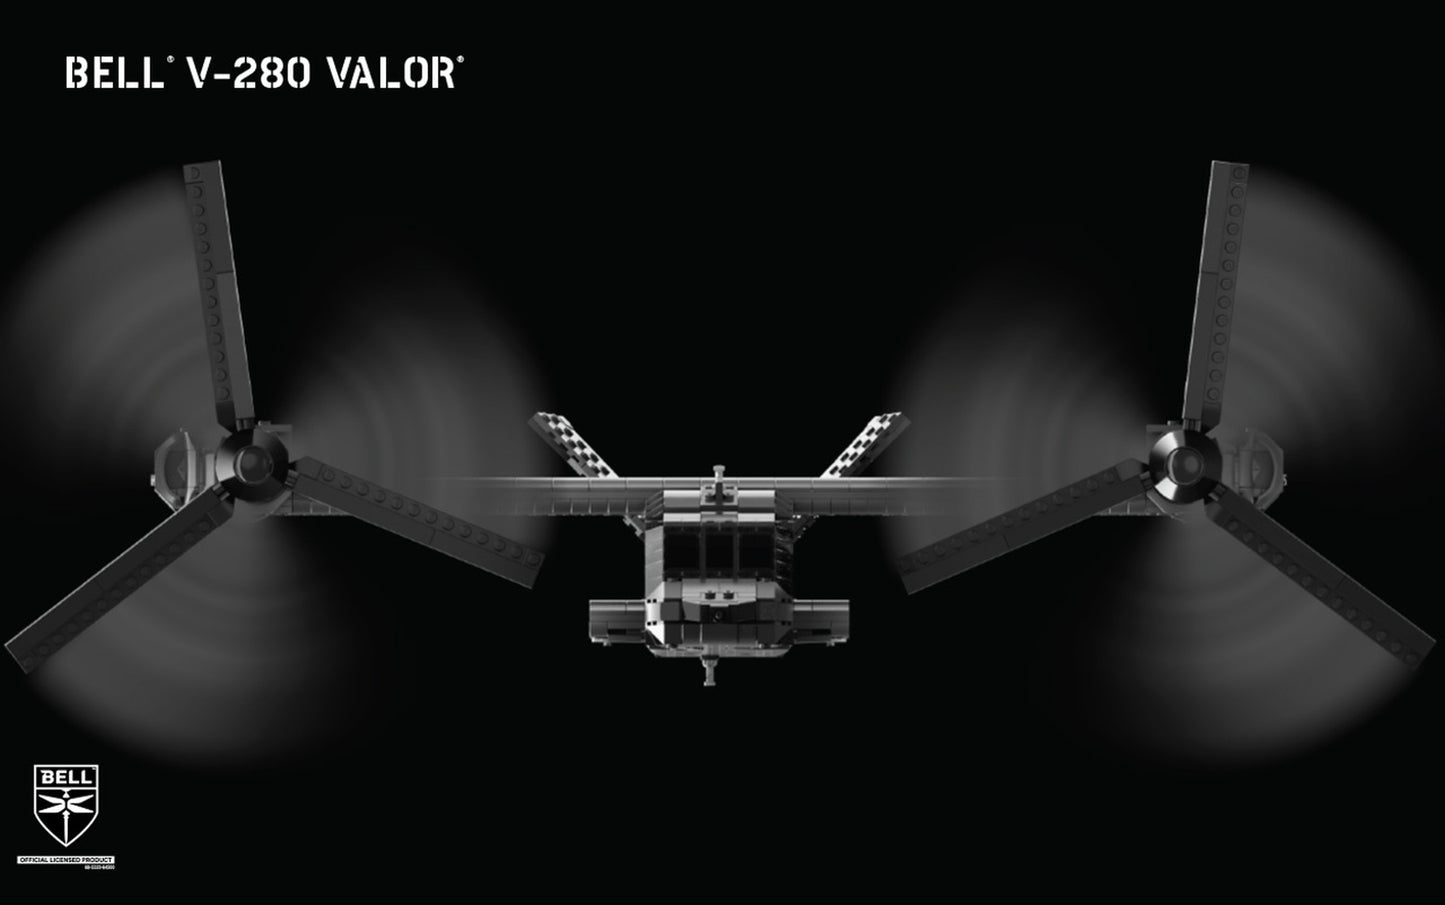 Load image into Gallery viewer, Bell® V-280 Valor® - Future Long Range Assault Aircraft - MOMCOM inc.
